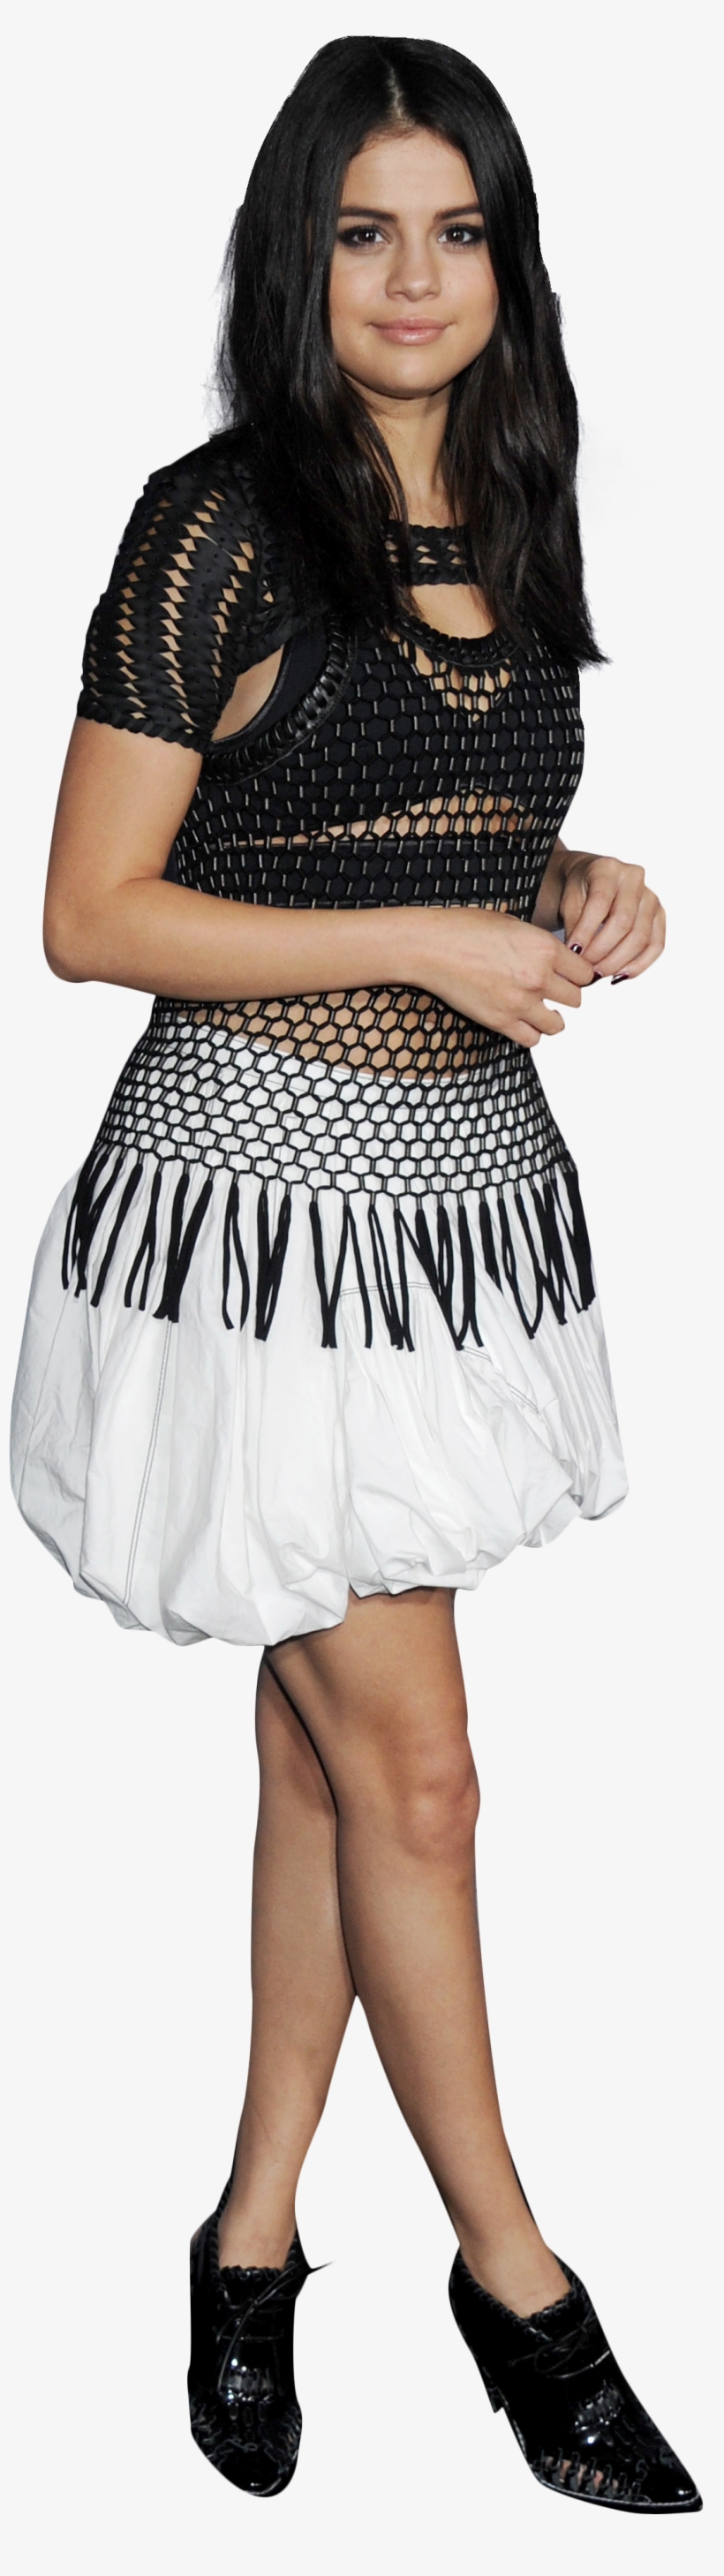 Selena Gomez White Dress Png Image - Portable Network Graphics, transparent png #3991923